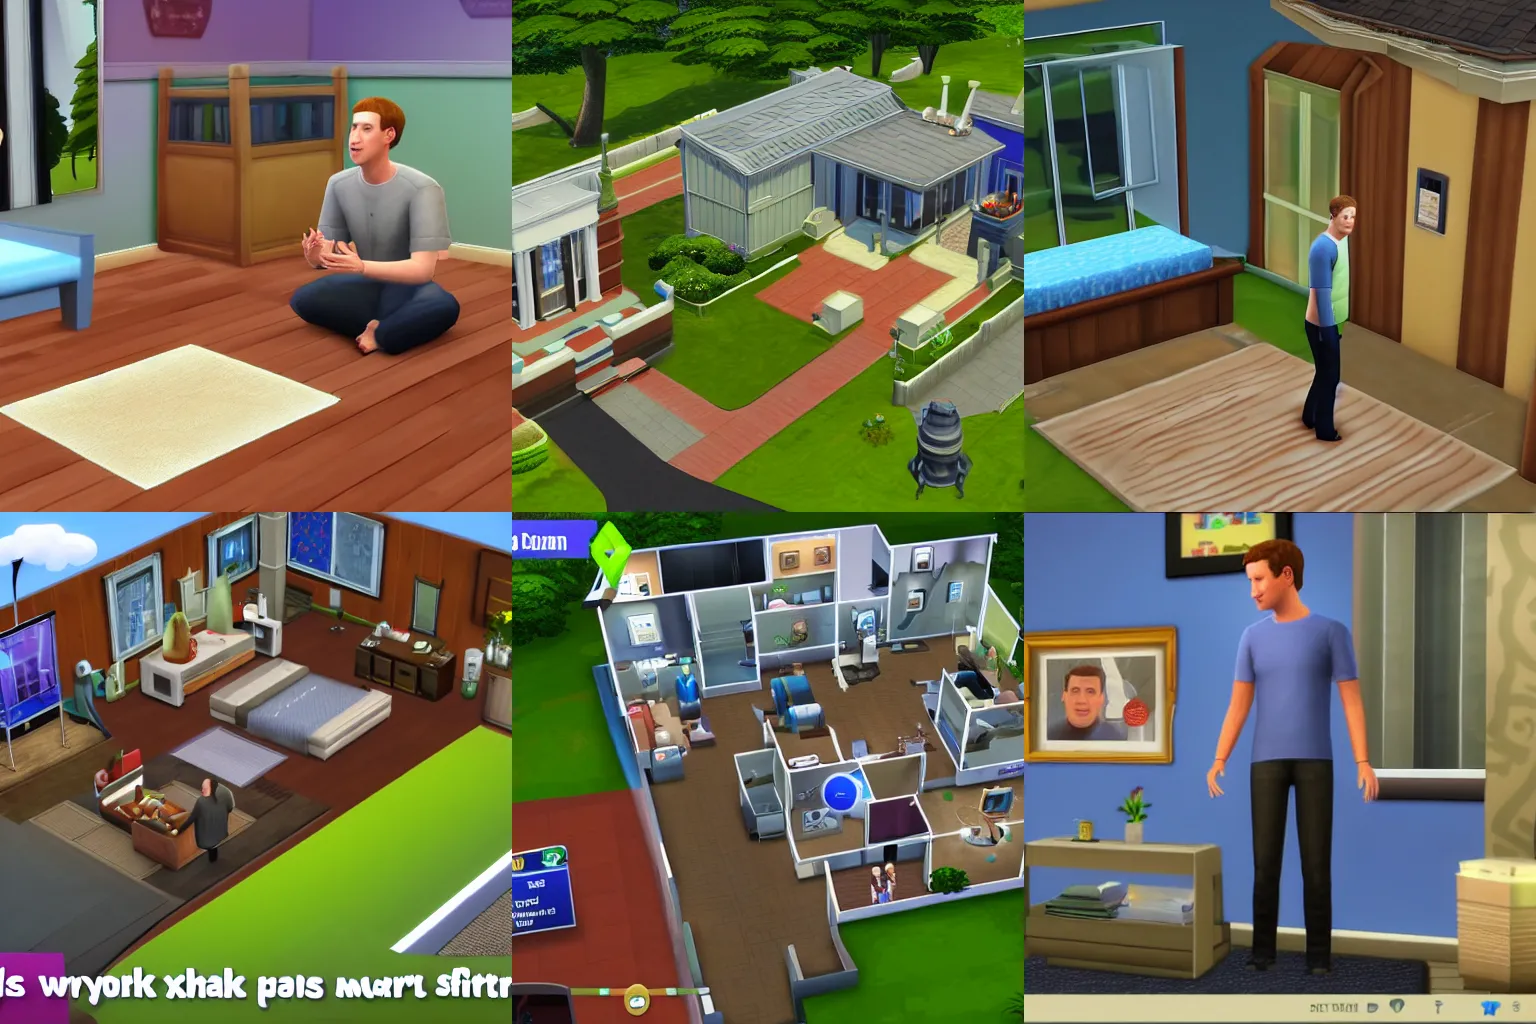 Prompt: Screenshot of Mark Zuckerberg in The Sims